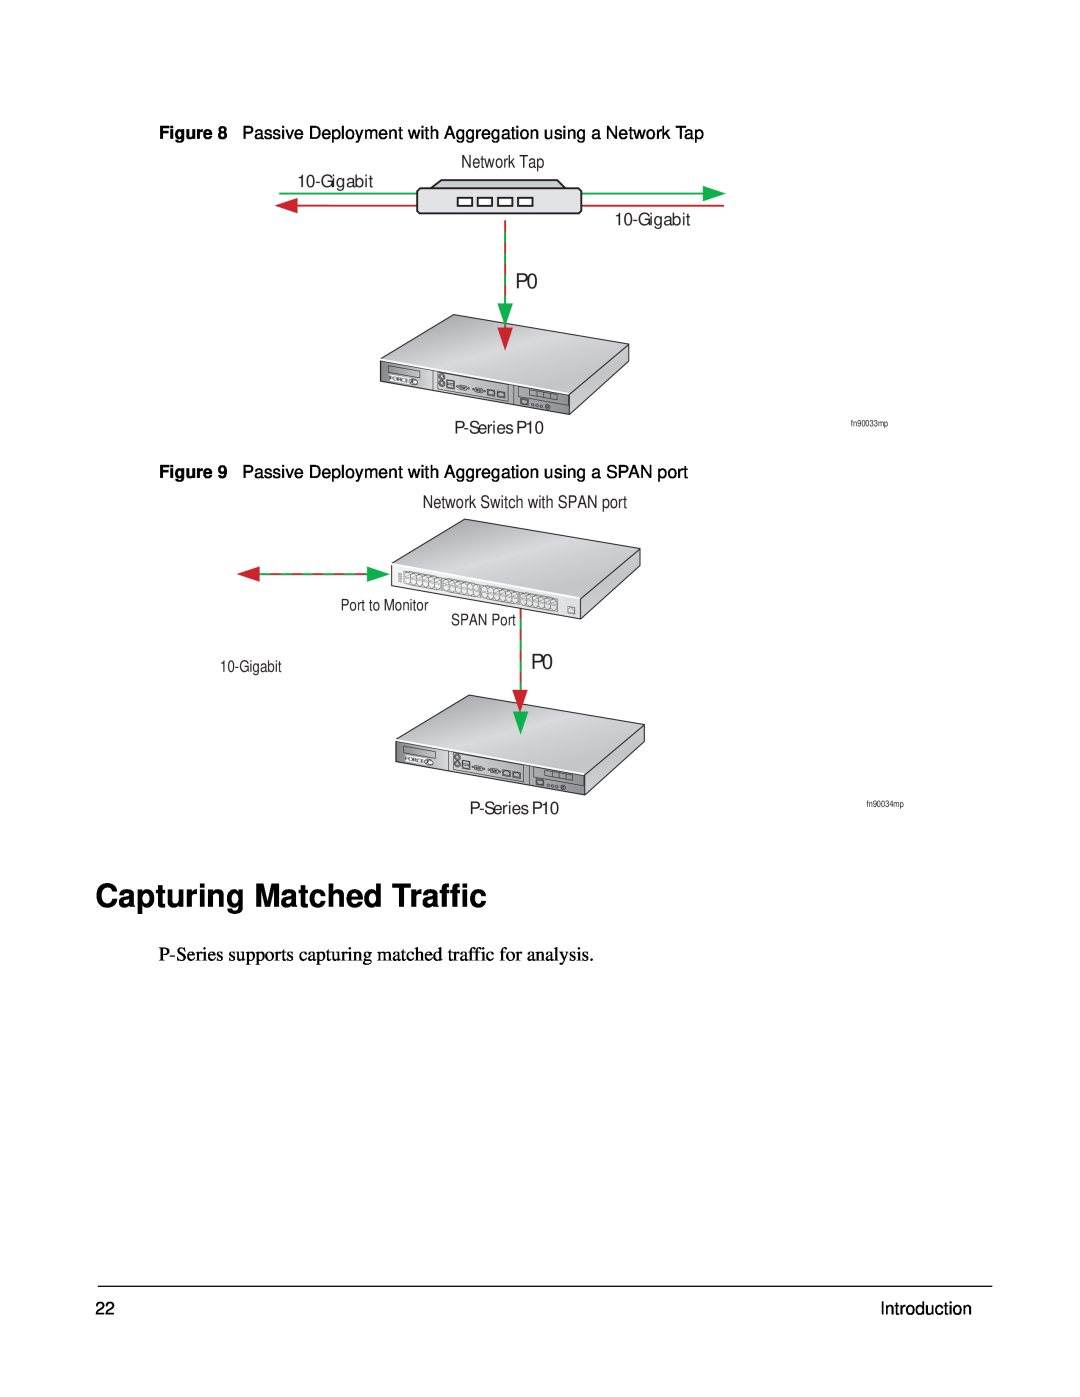 Force10 Networks 100-00055-01 manual Capturing Matched Traffic, Network Tap 10-Gigabit 10-Gigabit, P-Series P10 